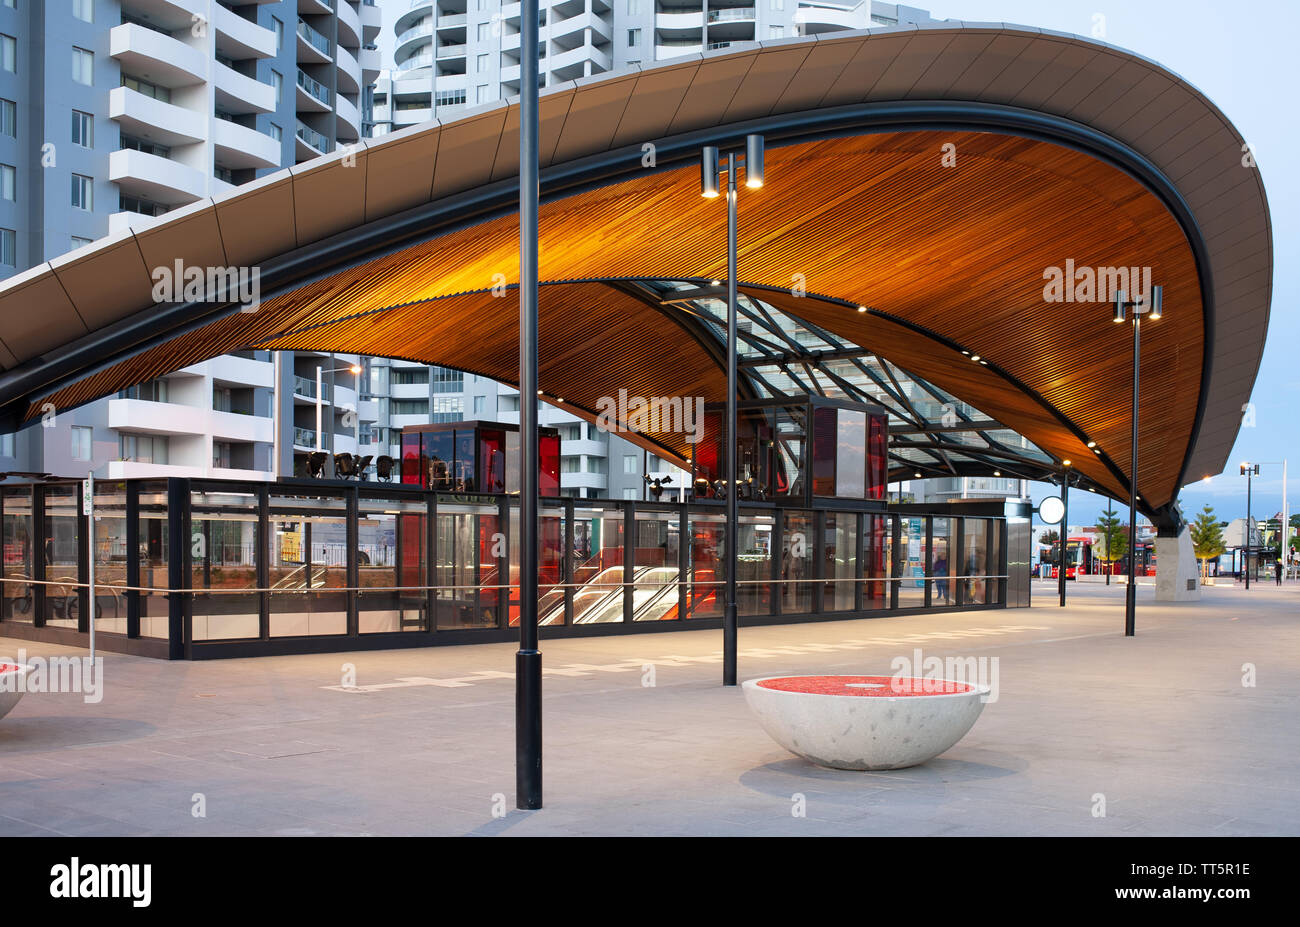 Sydney Metro Station at Castle Hill. Northwest NSW Australia. driverless, subway, railway station, modern transport. Futuristic architecture. Stock Photo